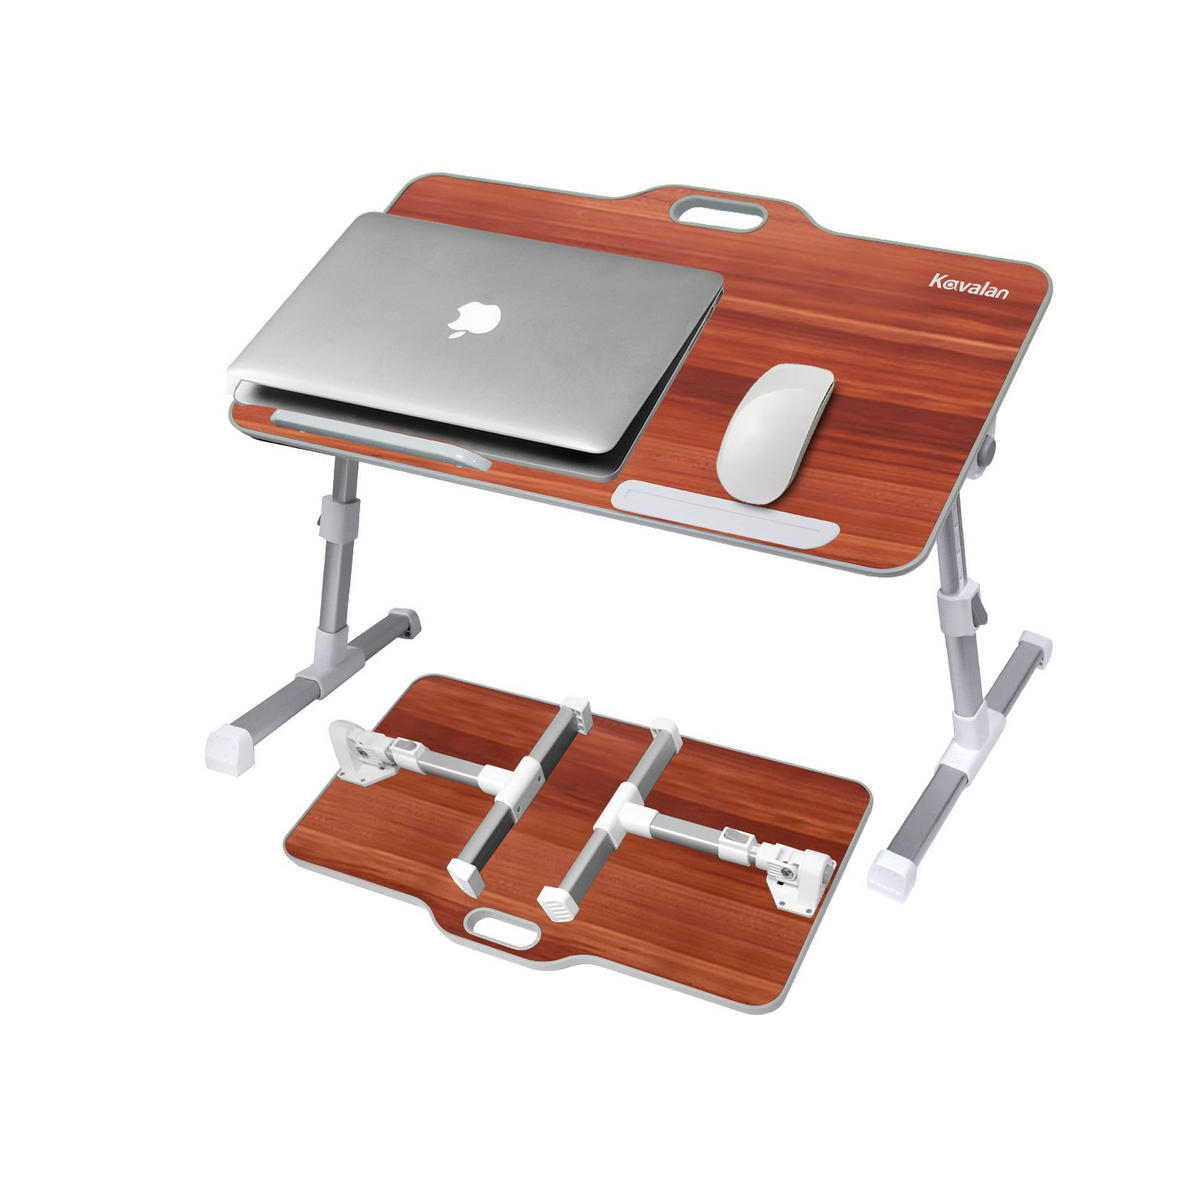 22 Best Stylish Small Desks 2020 The, Best Portable Computer Desks